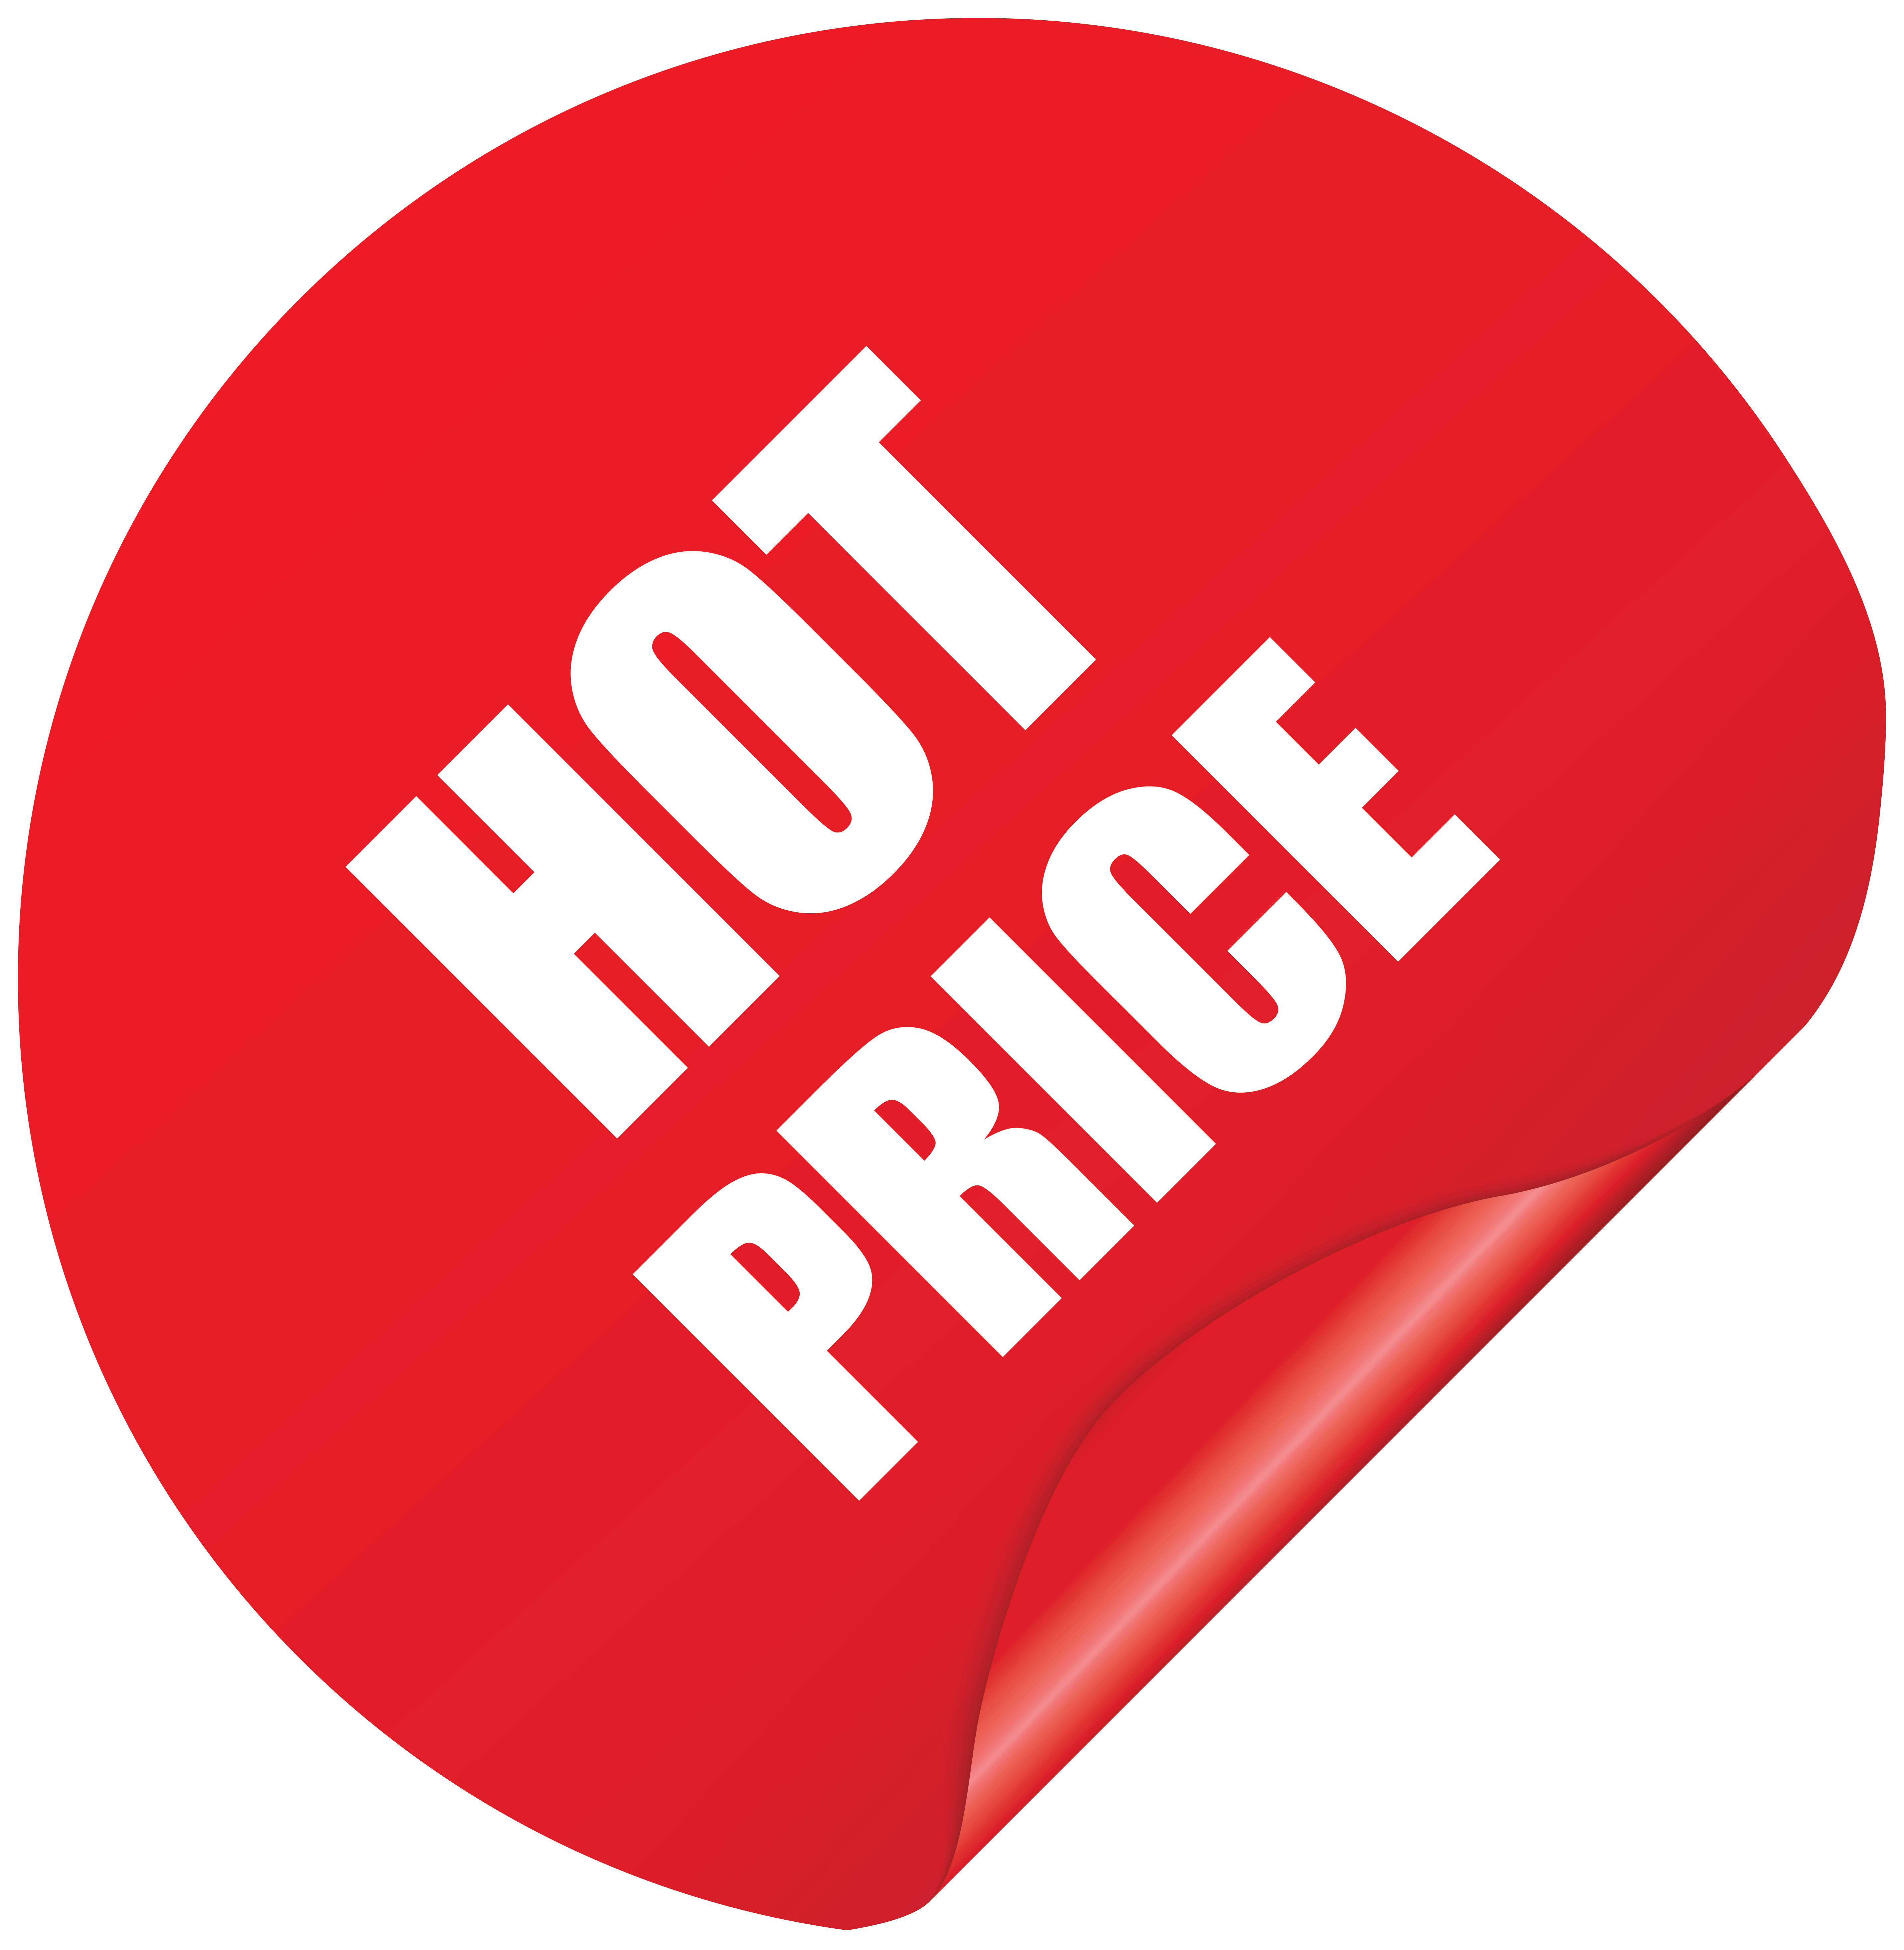 Hot price sticker.